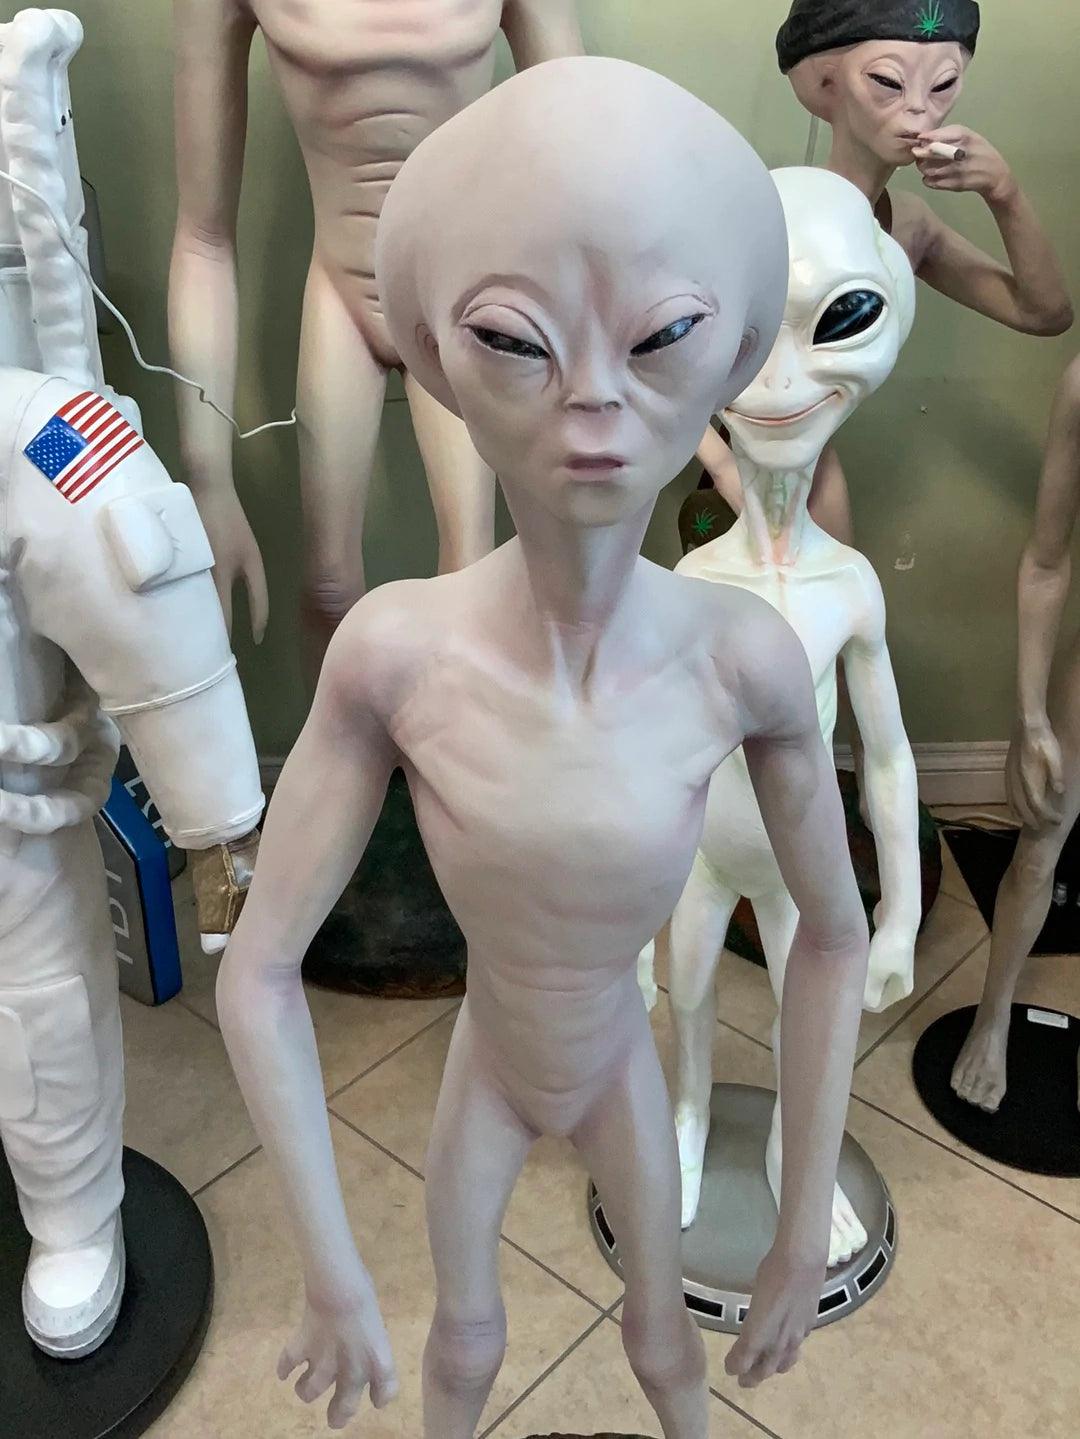 Alien Encounter Life Size Statue - LM Treasures Prop Rentals 